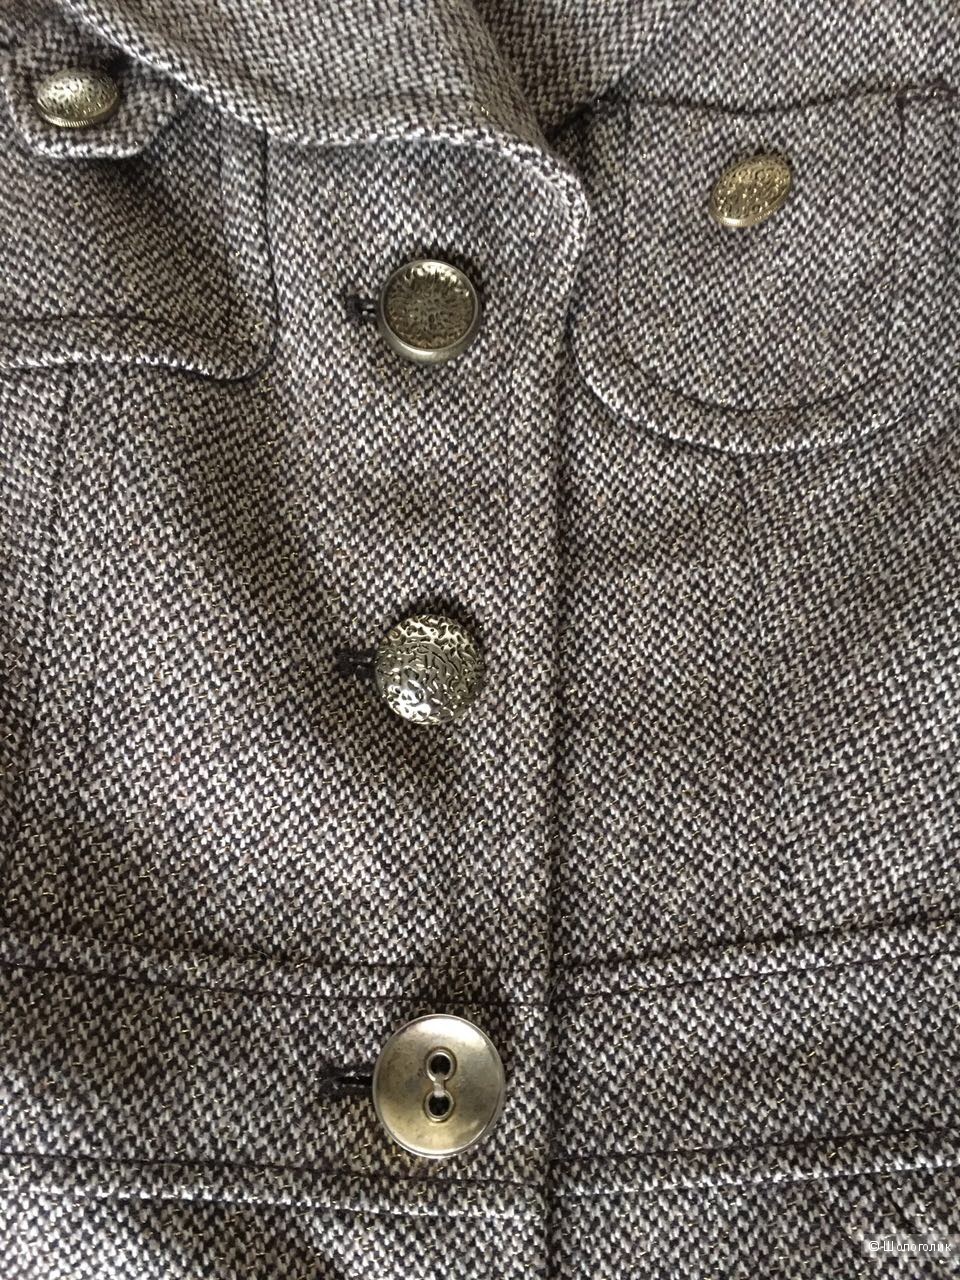 Пальто, р 44-46, ткань Италия